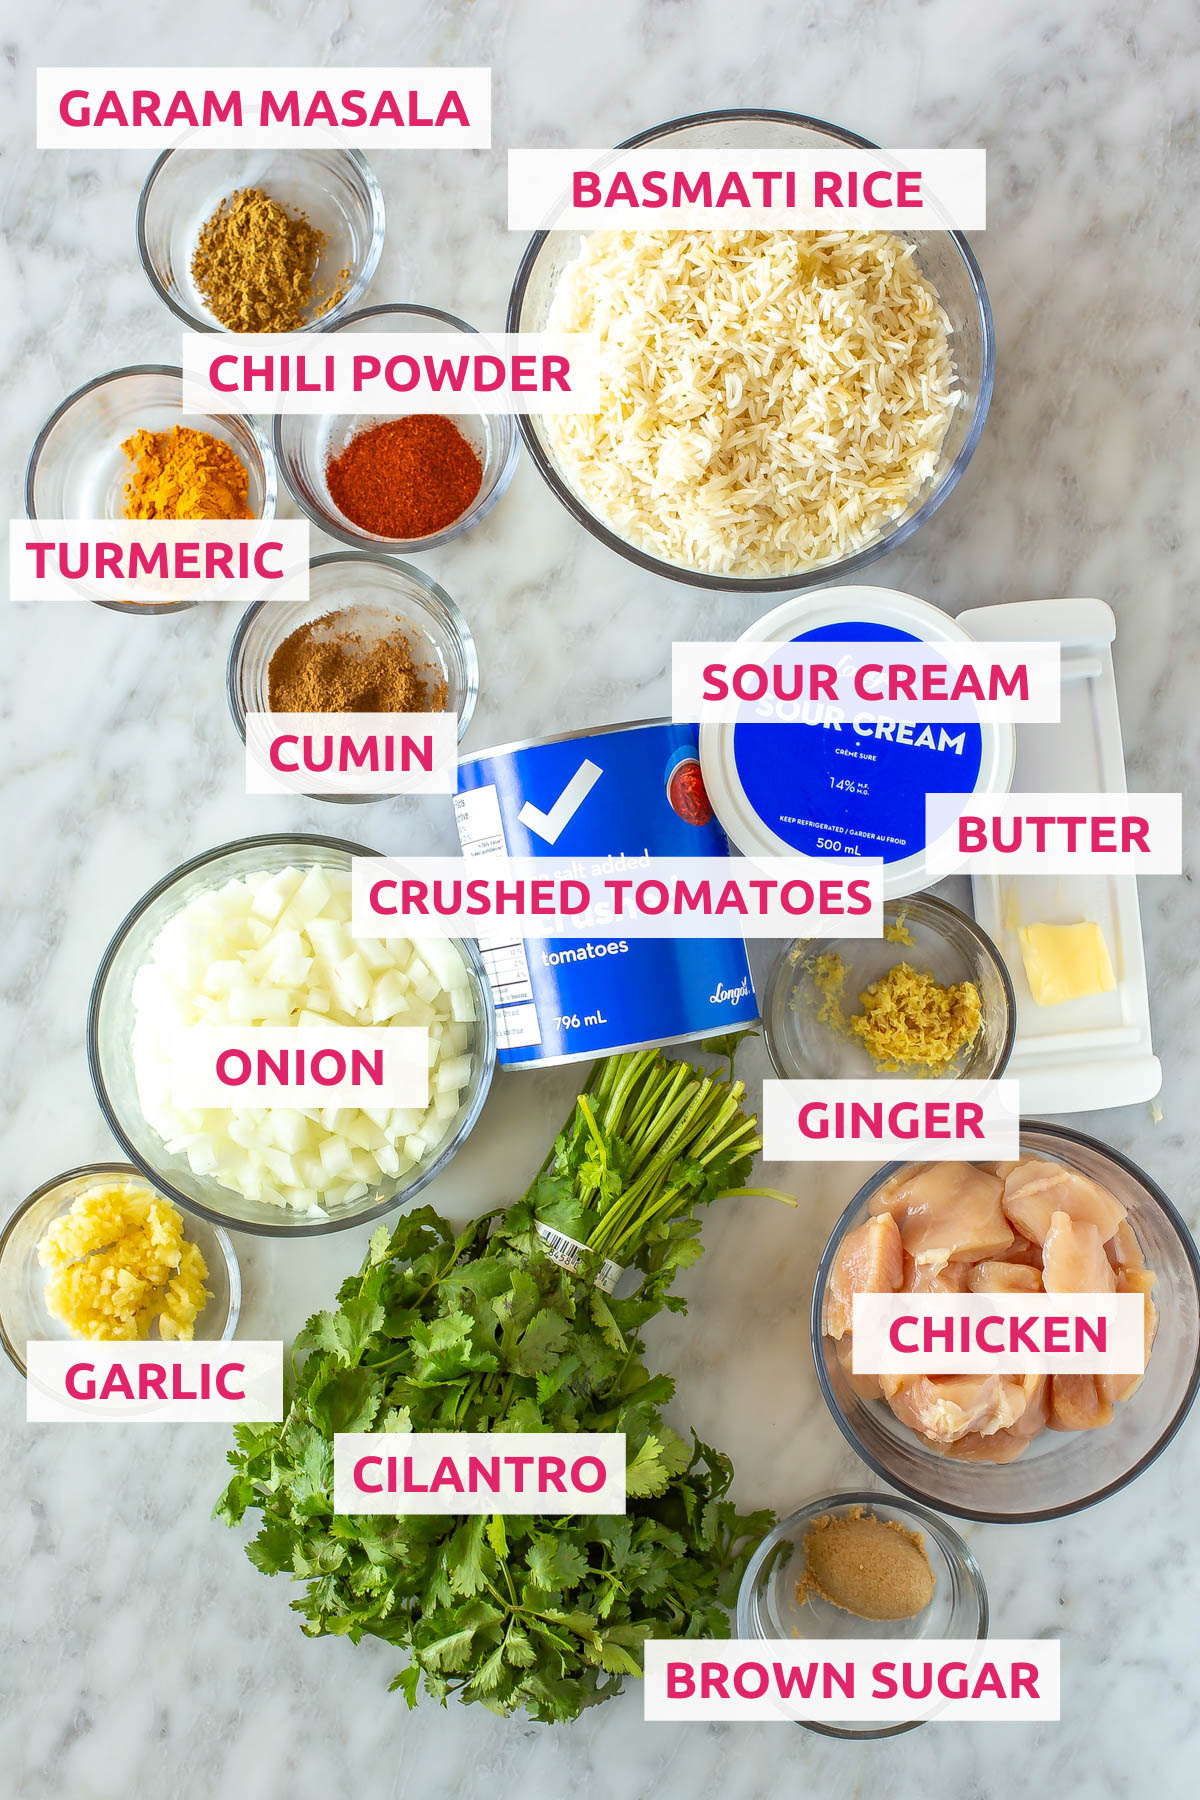 Ingredients for slow cooker chicken tikka masala: chicken, brown sugar, cilantro, ginger, garlic, onion, crushed tomatoes, sour cream, butter, cumin, turmeric, chili powder, garam masala, and basmati rice.